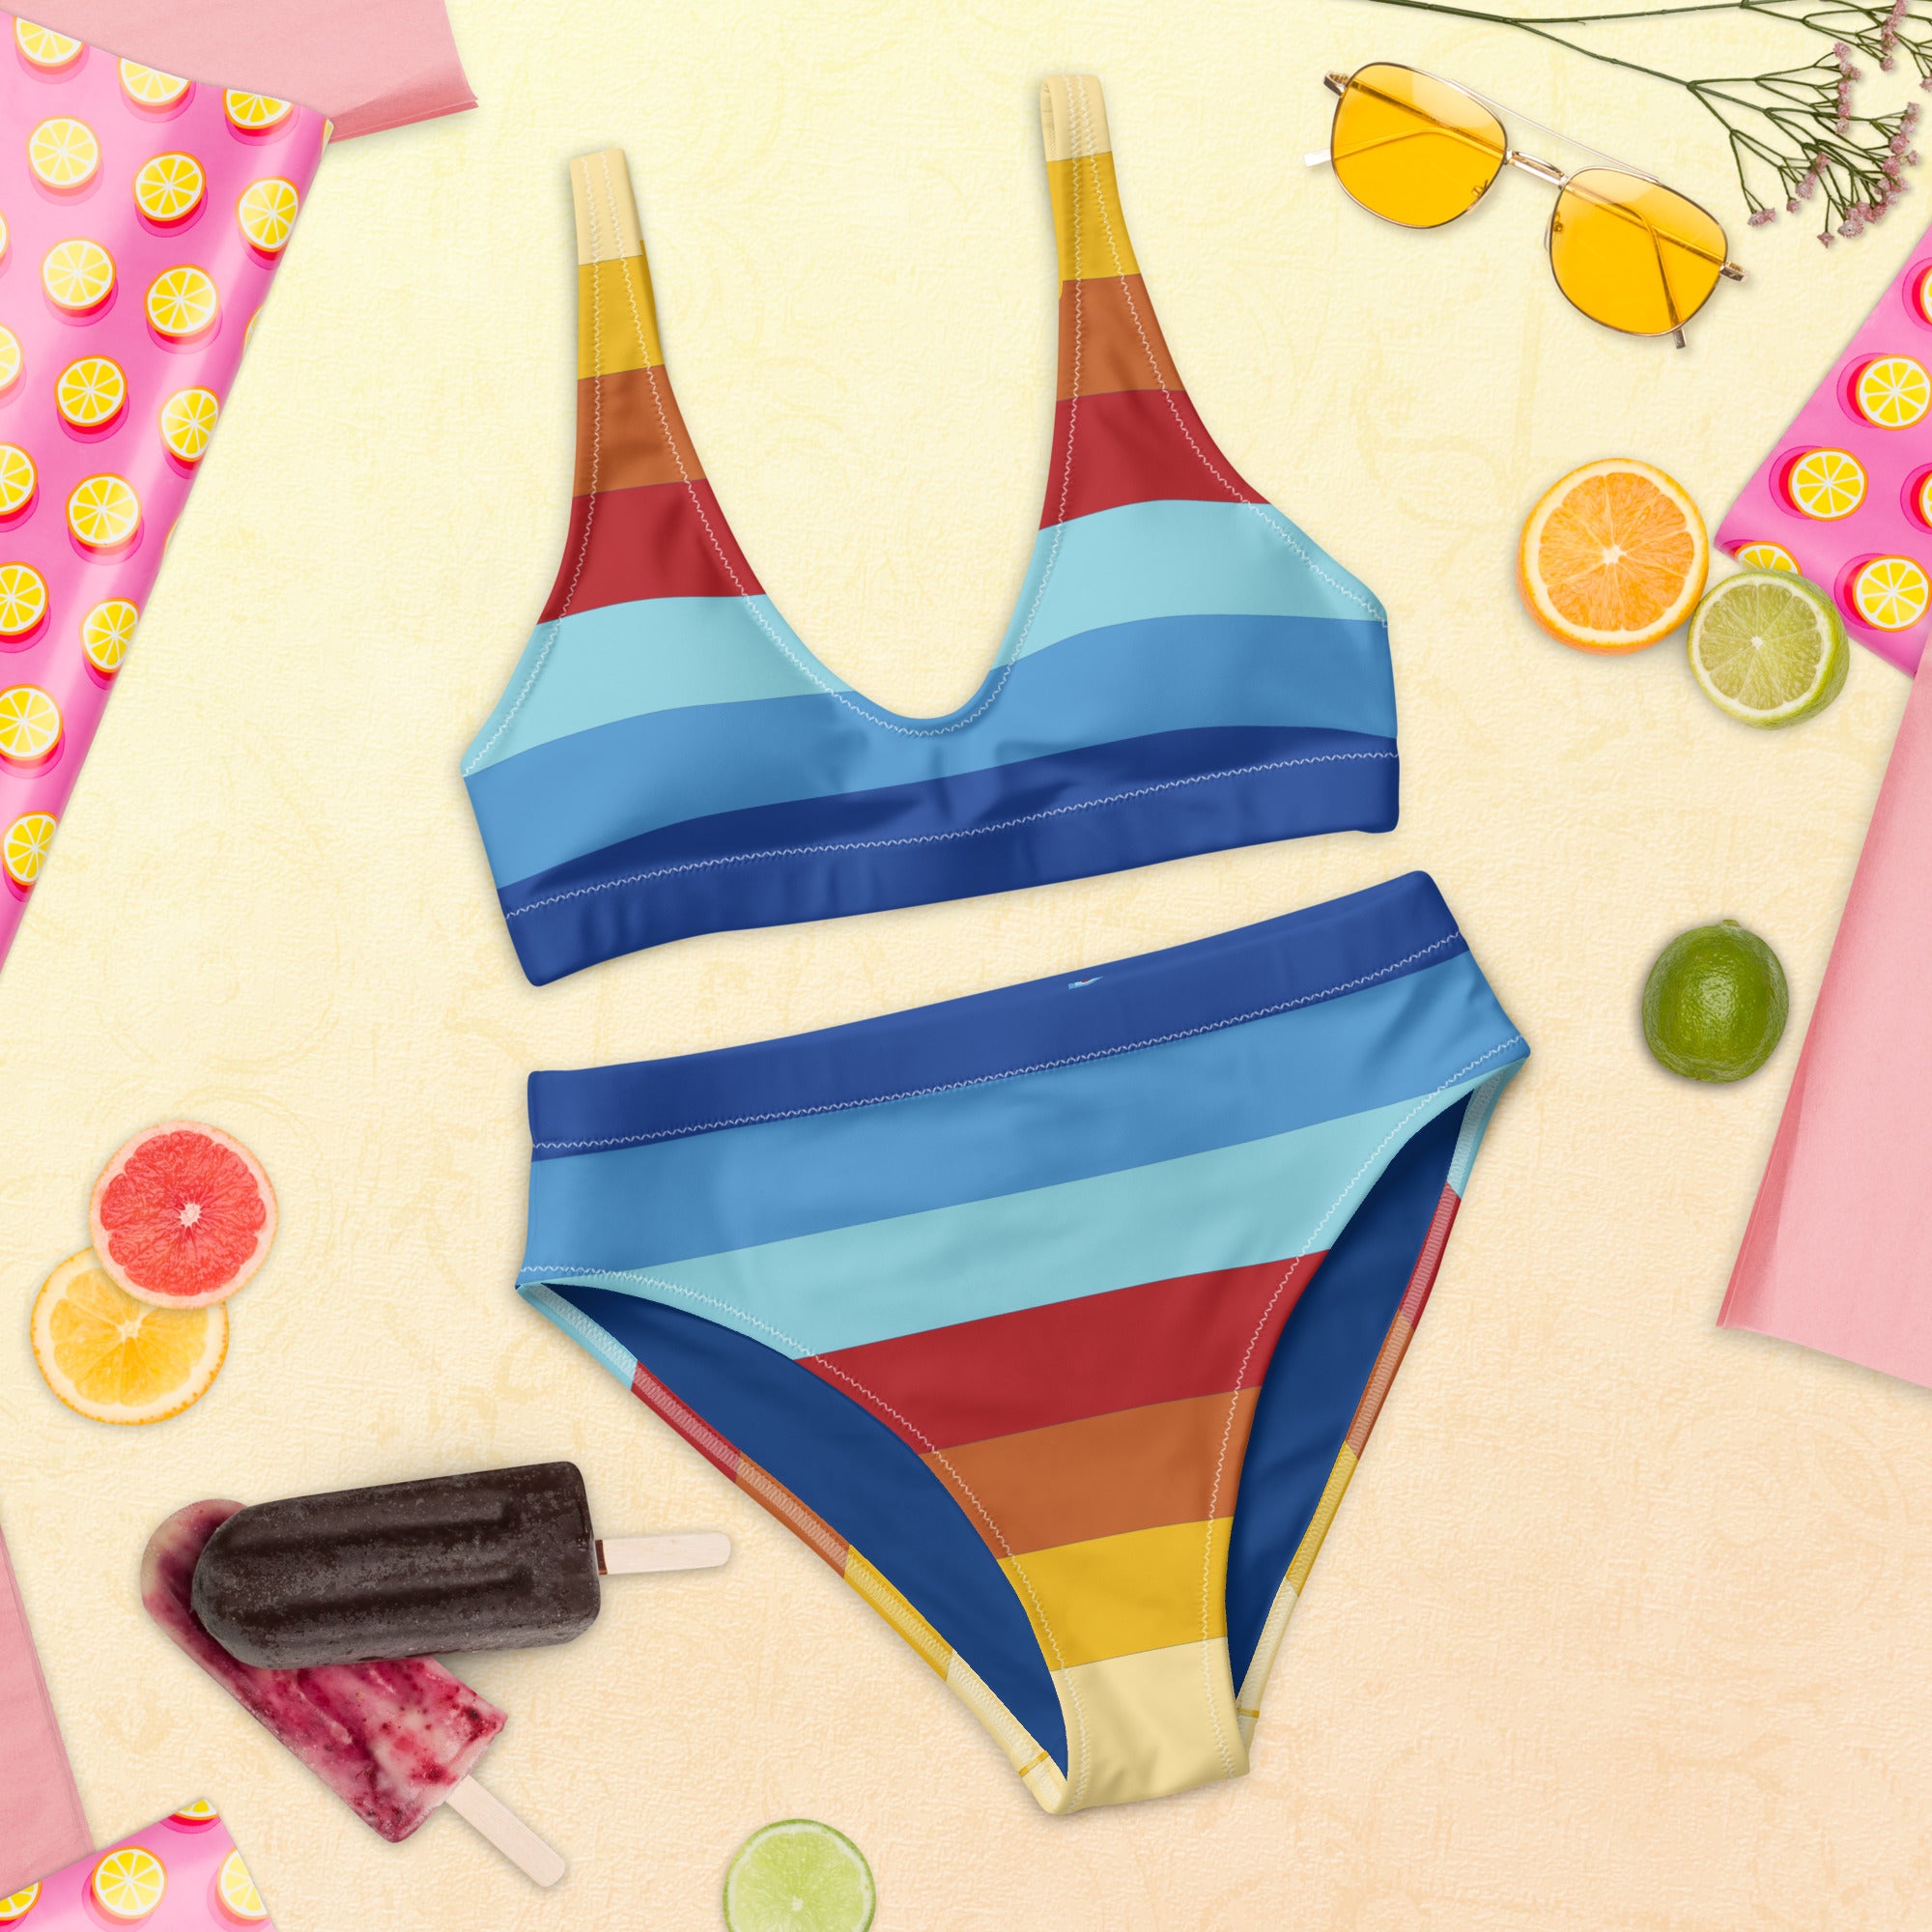 Rosanna Two-Piece Swimsuit